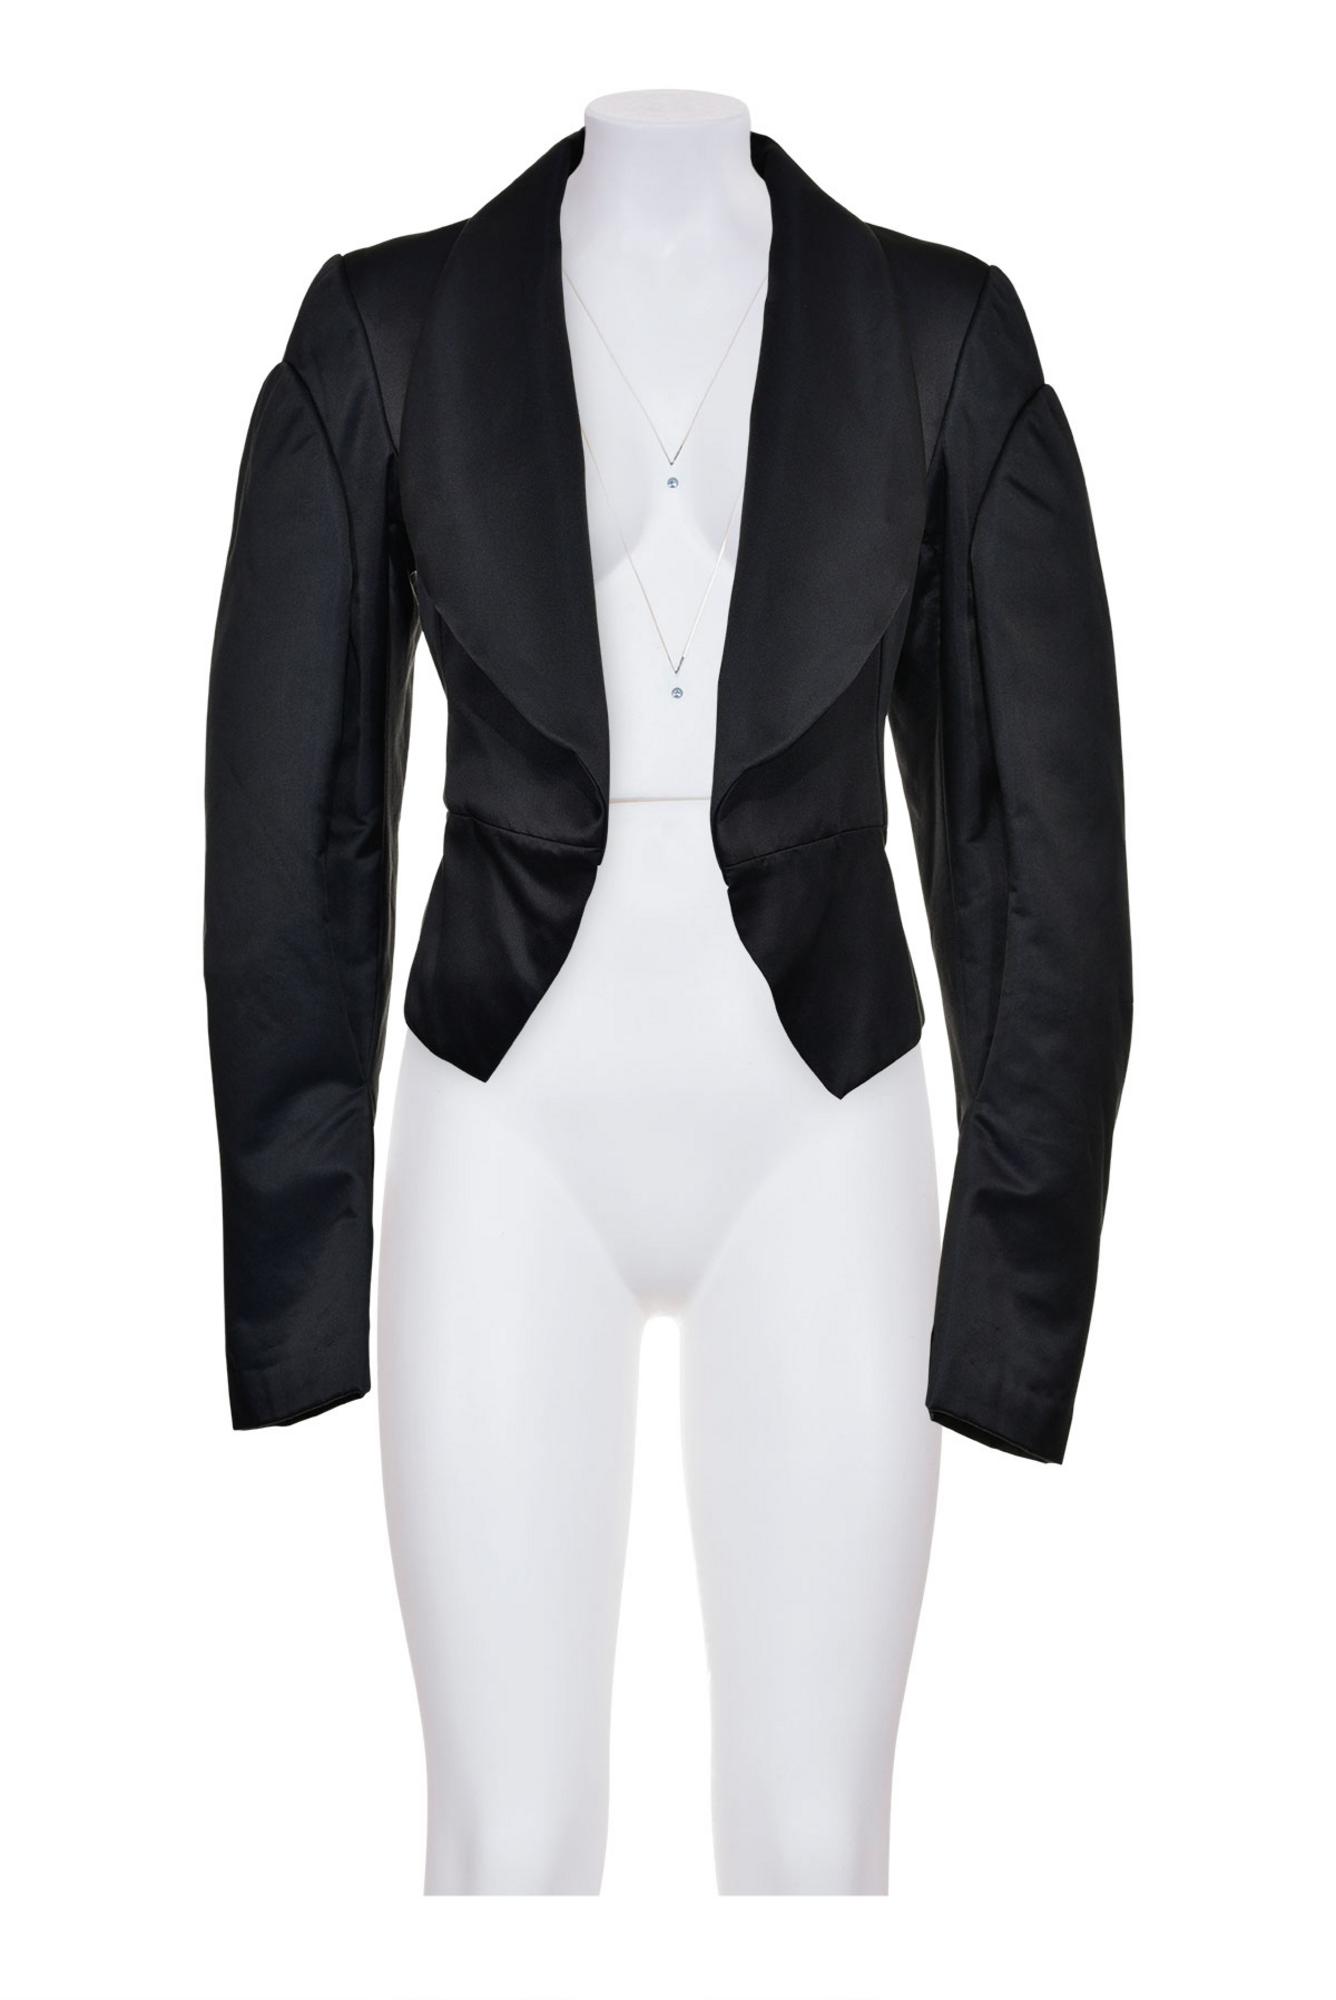 COMME DES GARCONS Spencer jacket with doubled sleeves DESCRIPTION: Black...